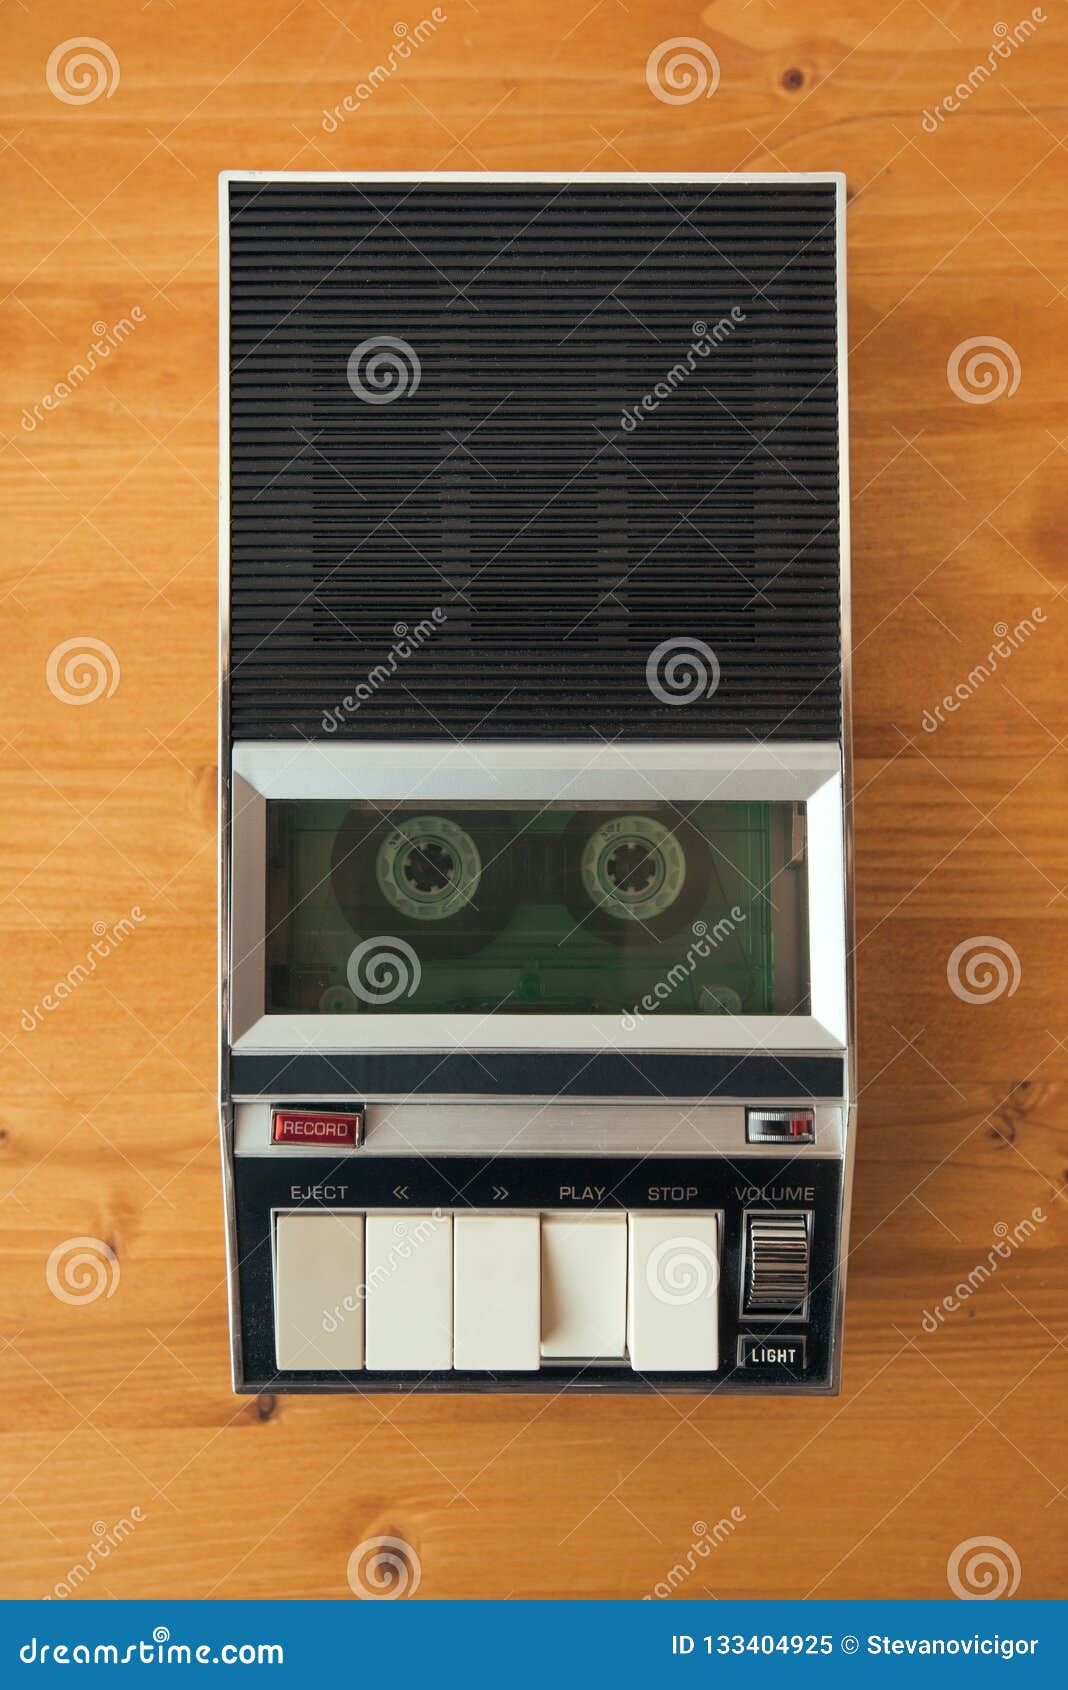 https://thumbs.dreamstime.com/z/audio-cassette-tape-rolling-vintage-player-desk-top-view-police-interrogation-sound-recording-retro-technology-concept-133404925.jpg